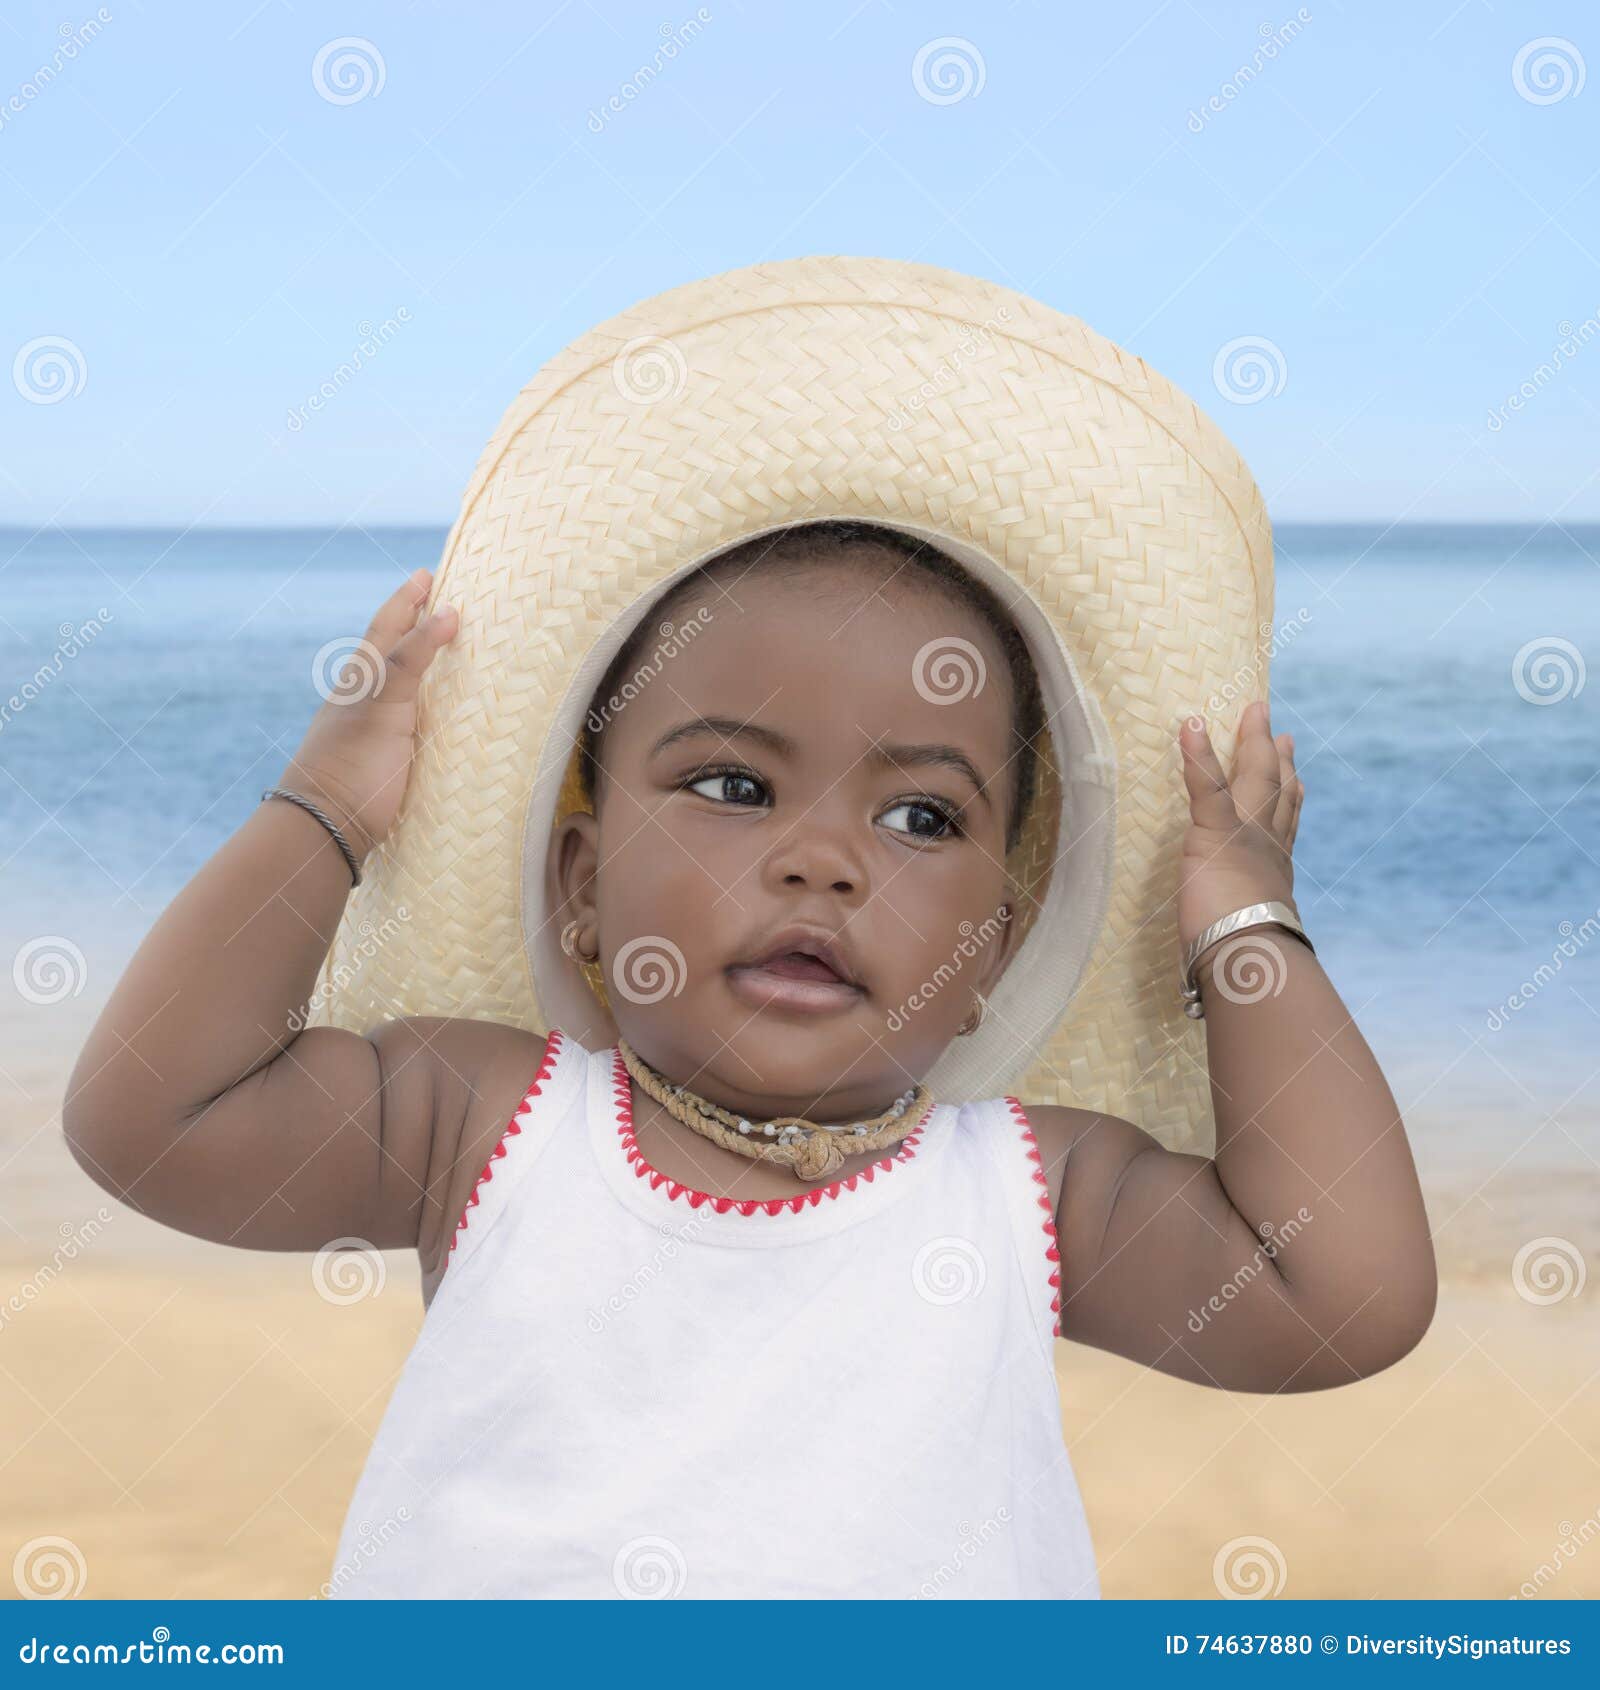 Oude tijden Dij Omgekeerde Baby Girl Wearing a Straw Hat at the Beach, Nine Months Old Stock Photo -  Image of angel, babies: 74637880